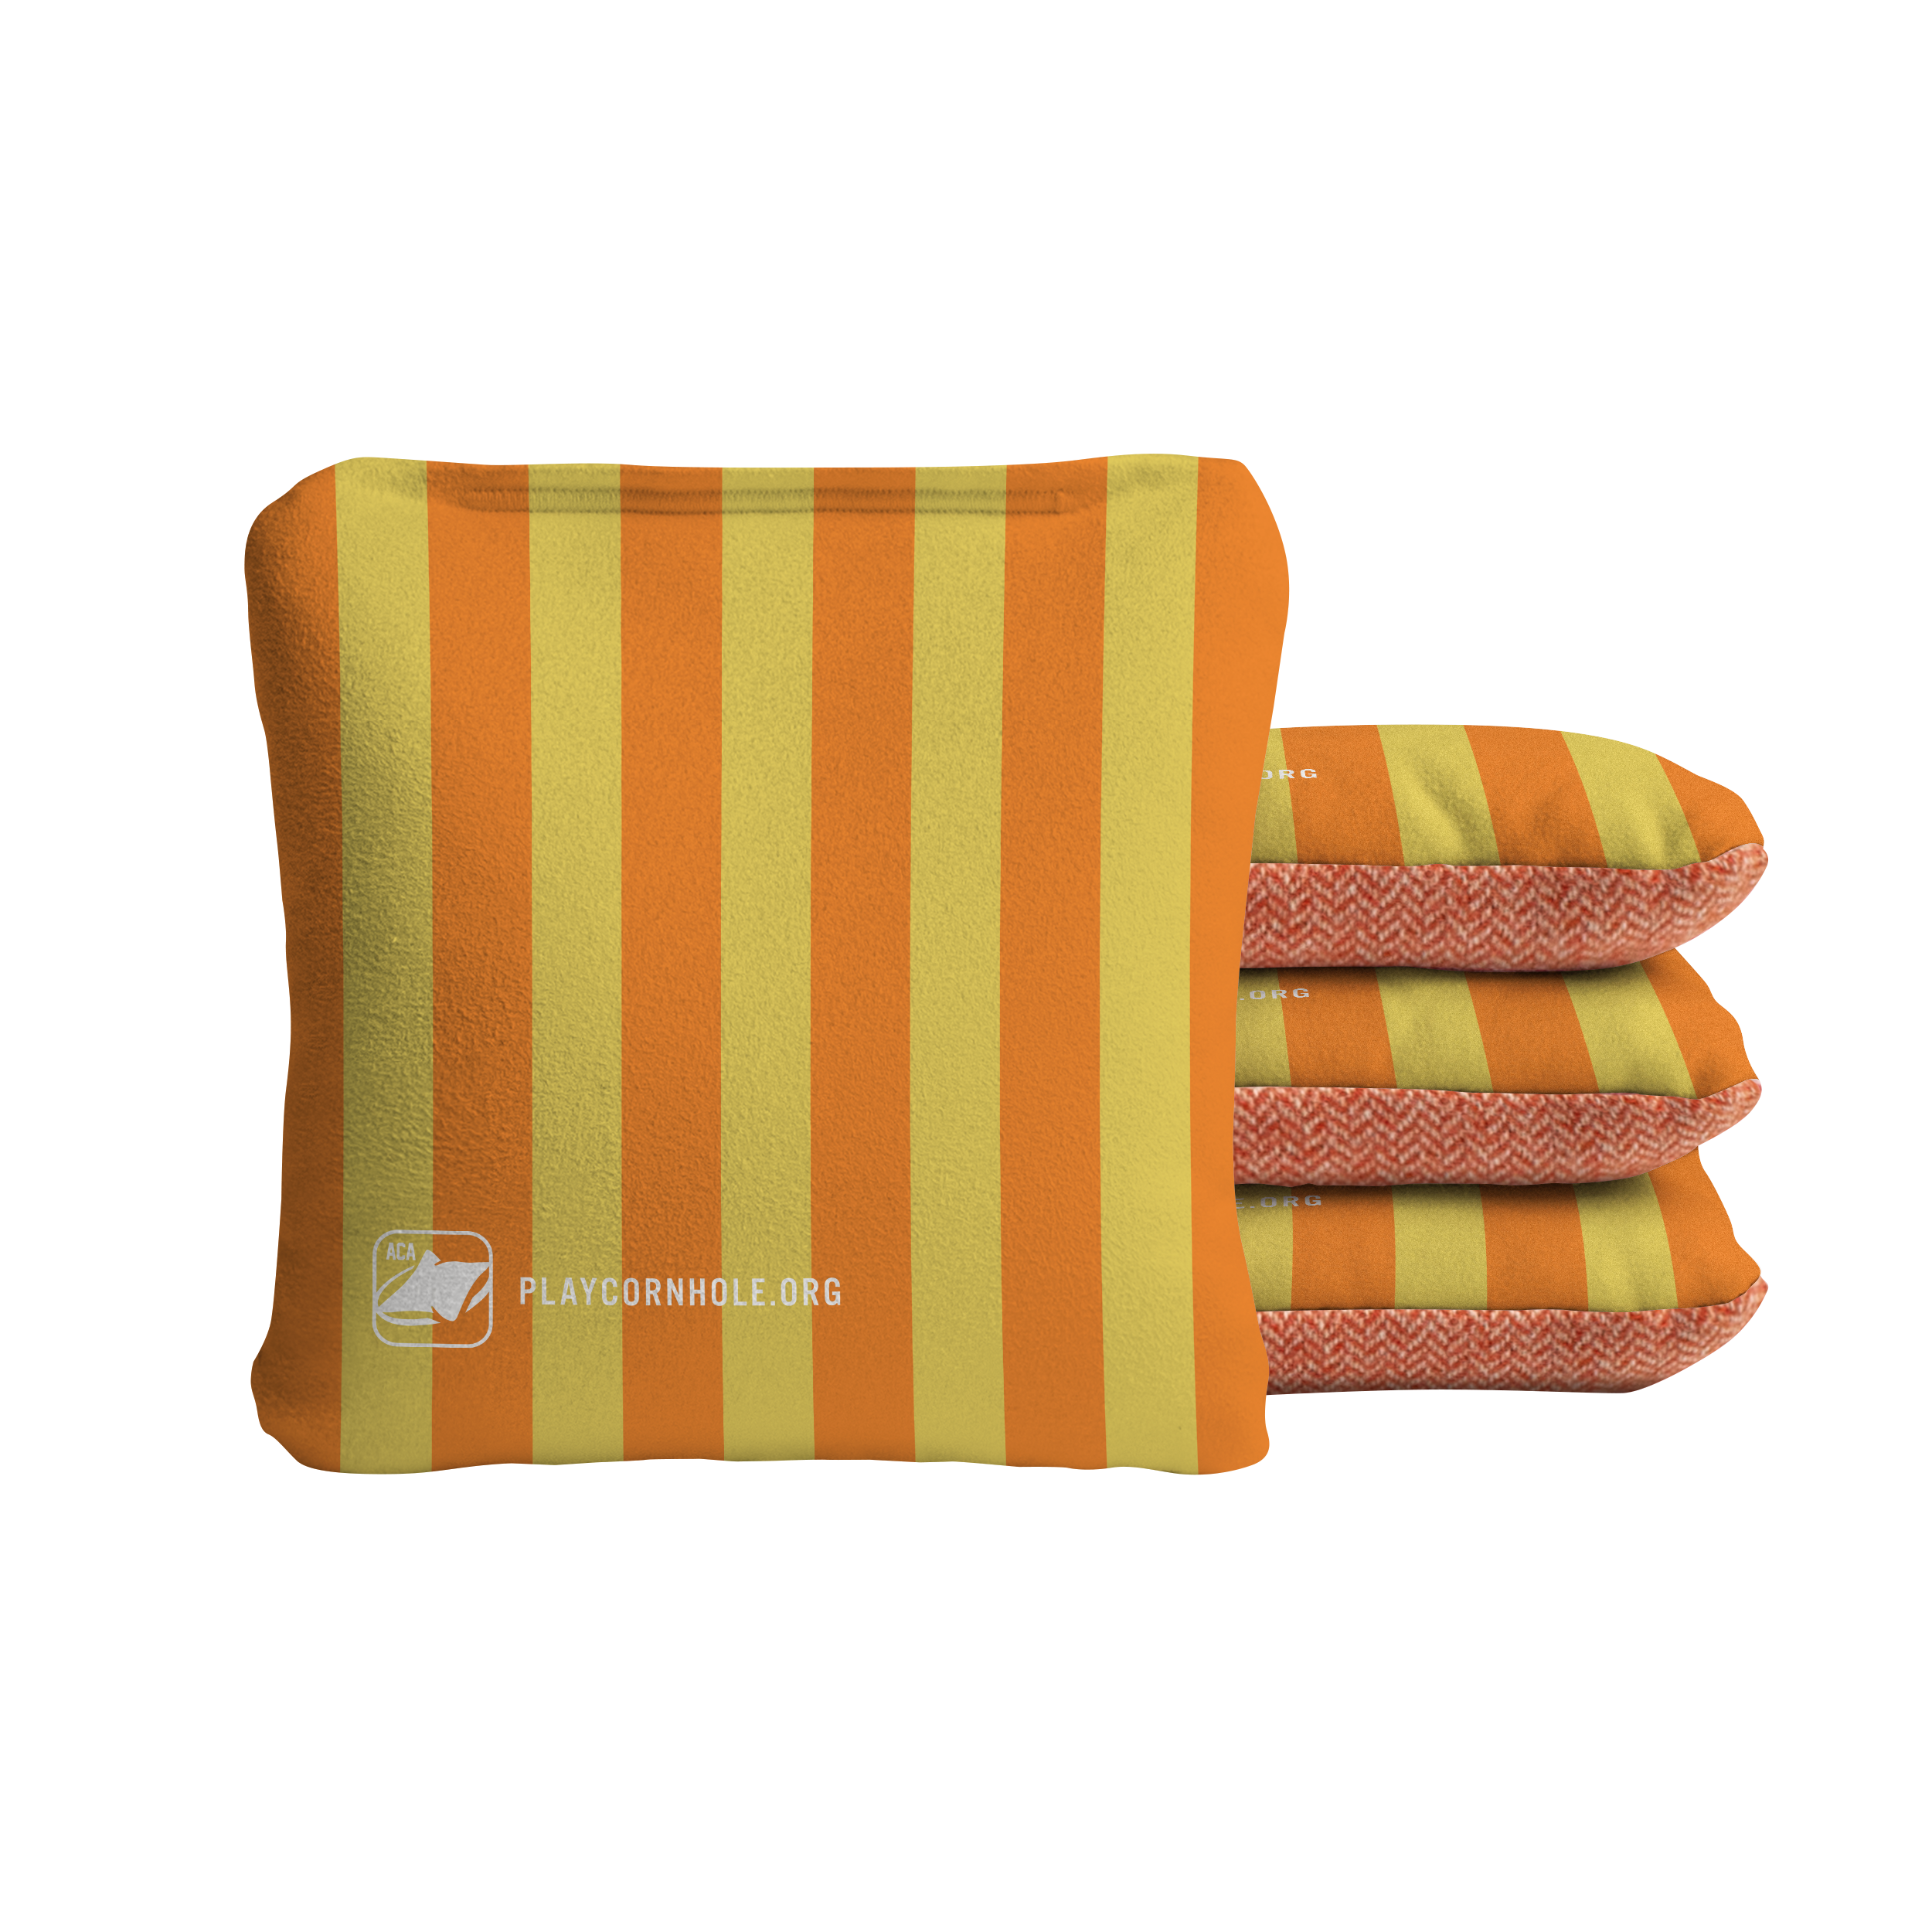 6-in Synergy Soft Beach Stripes Professional Regulation Cornhole Bags